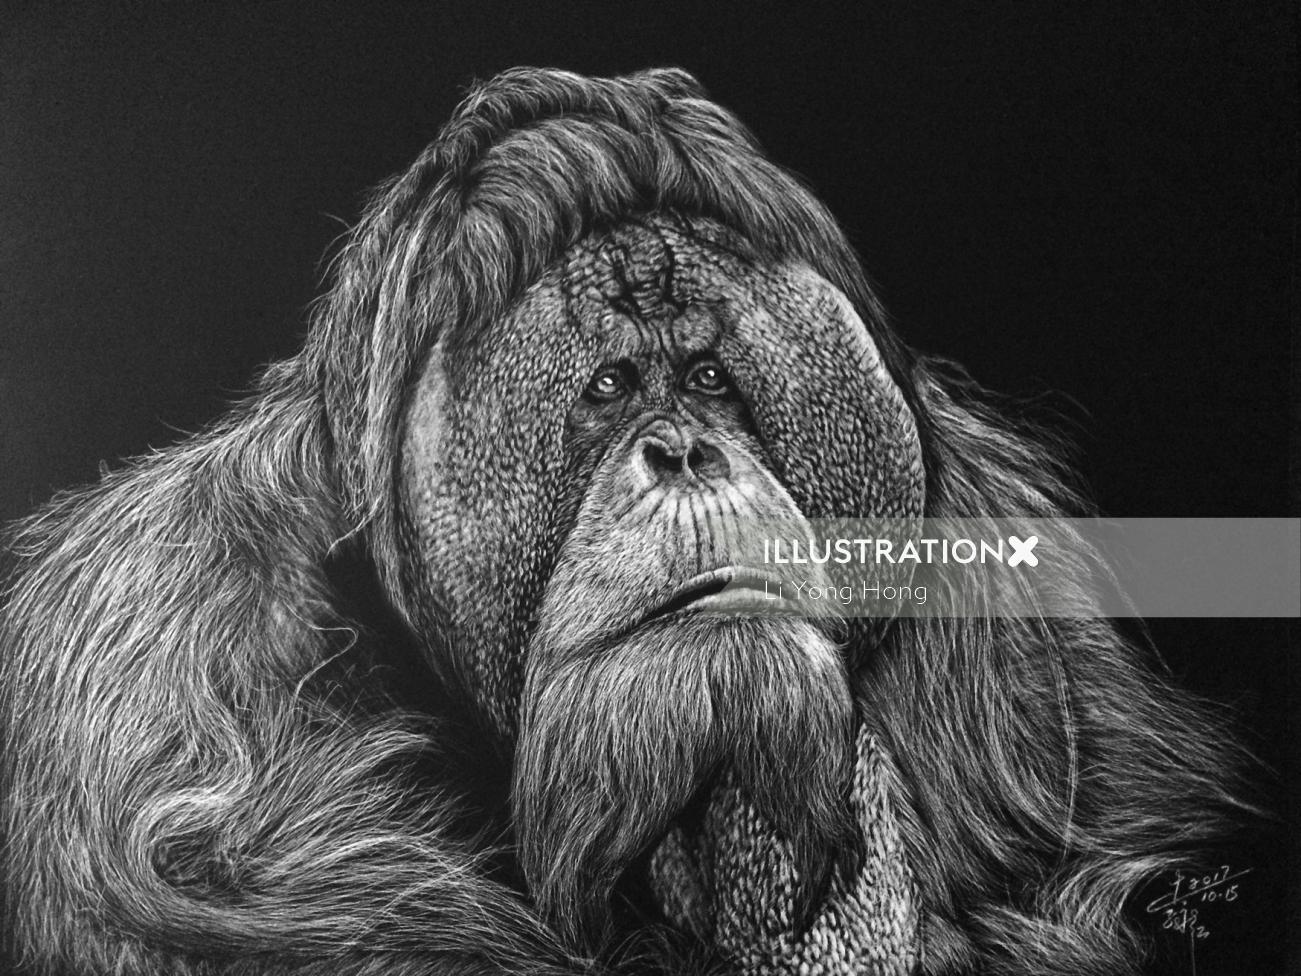 Black and white illustration of King Kong